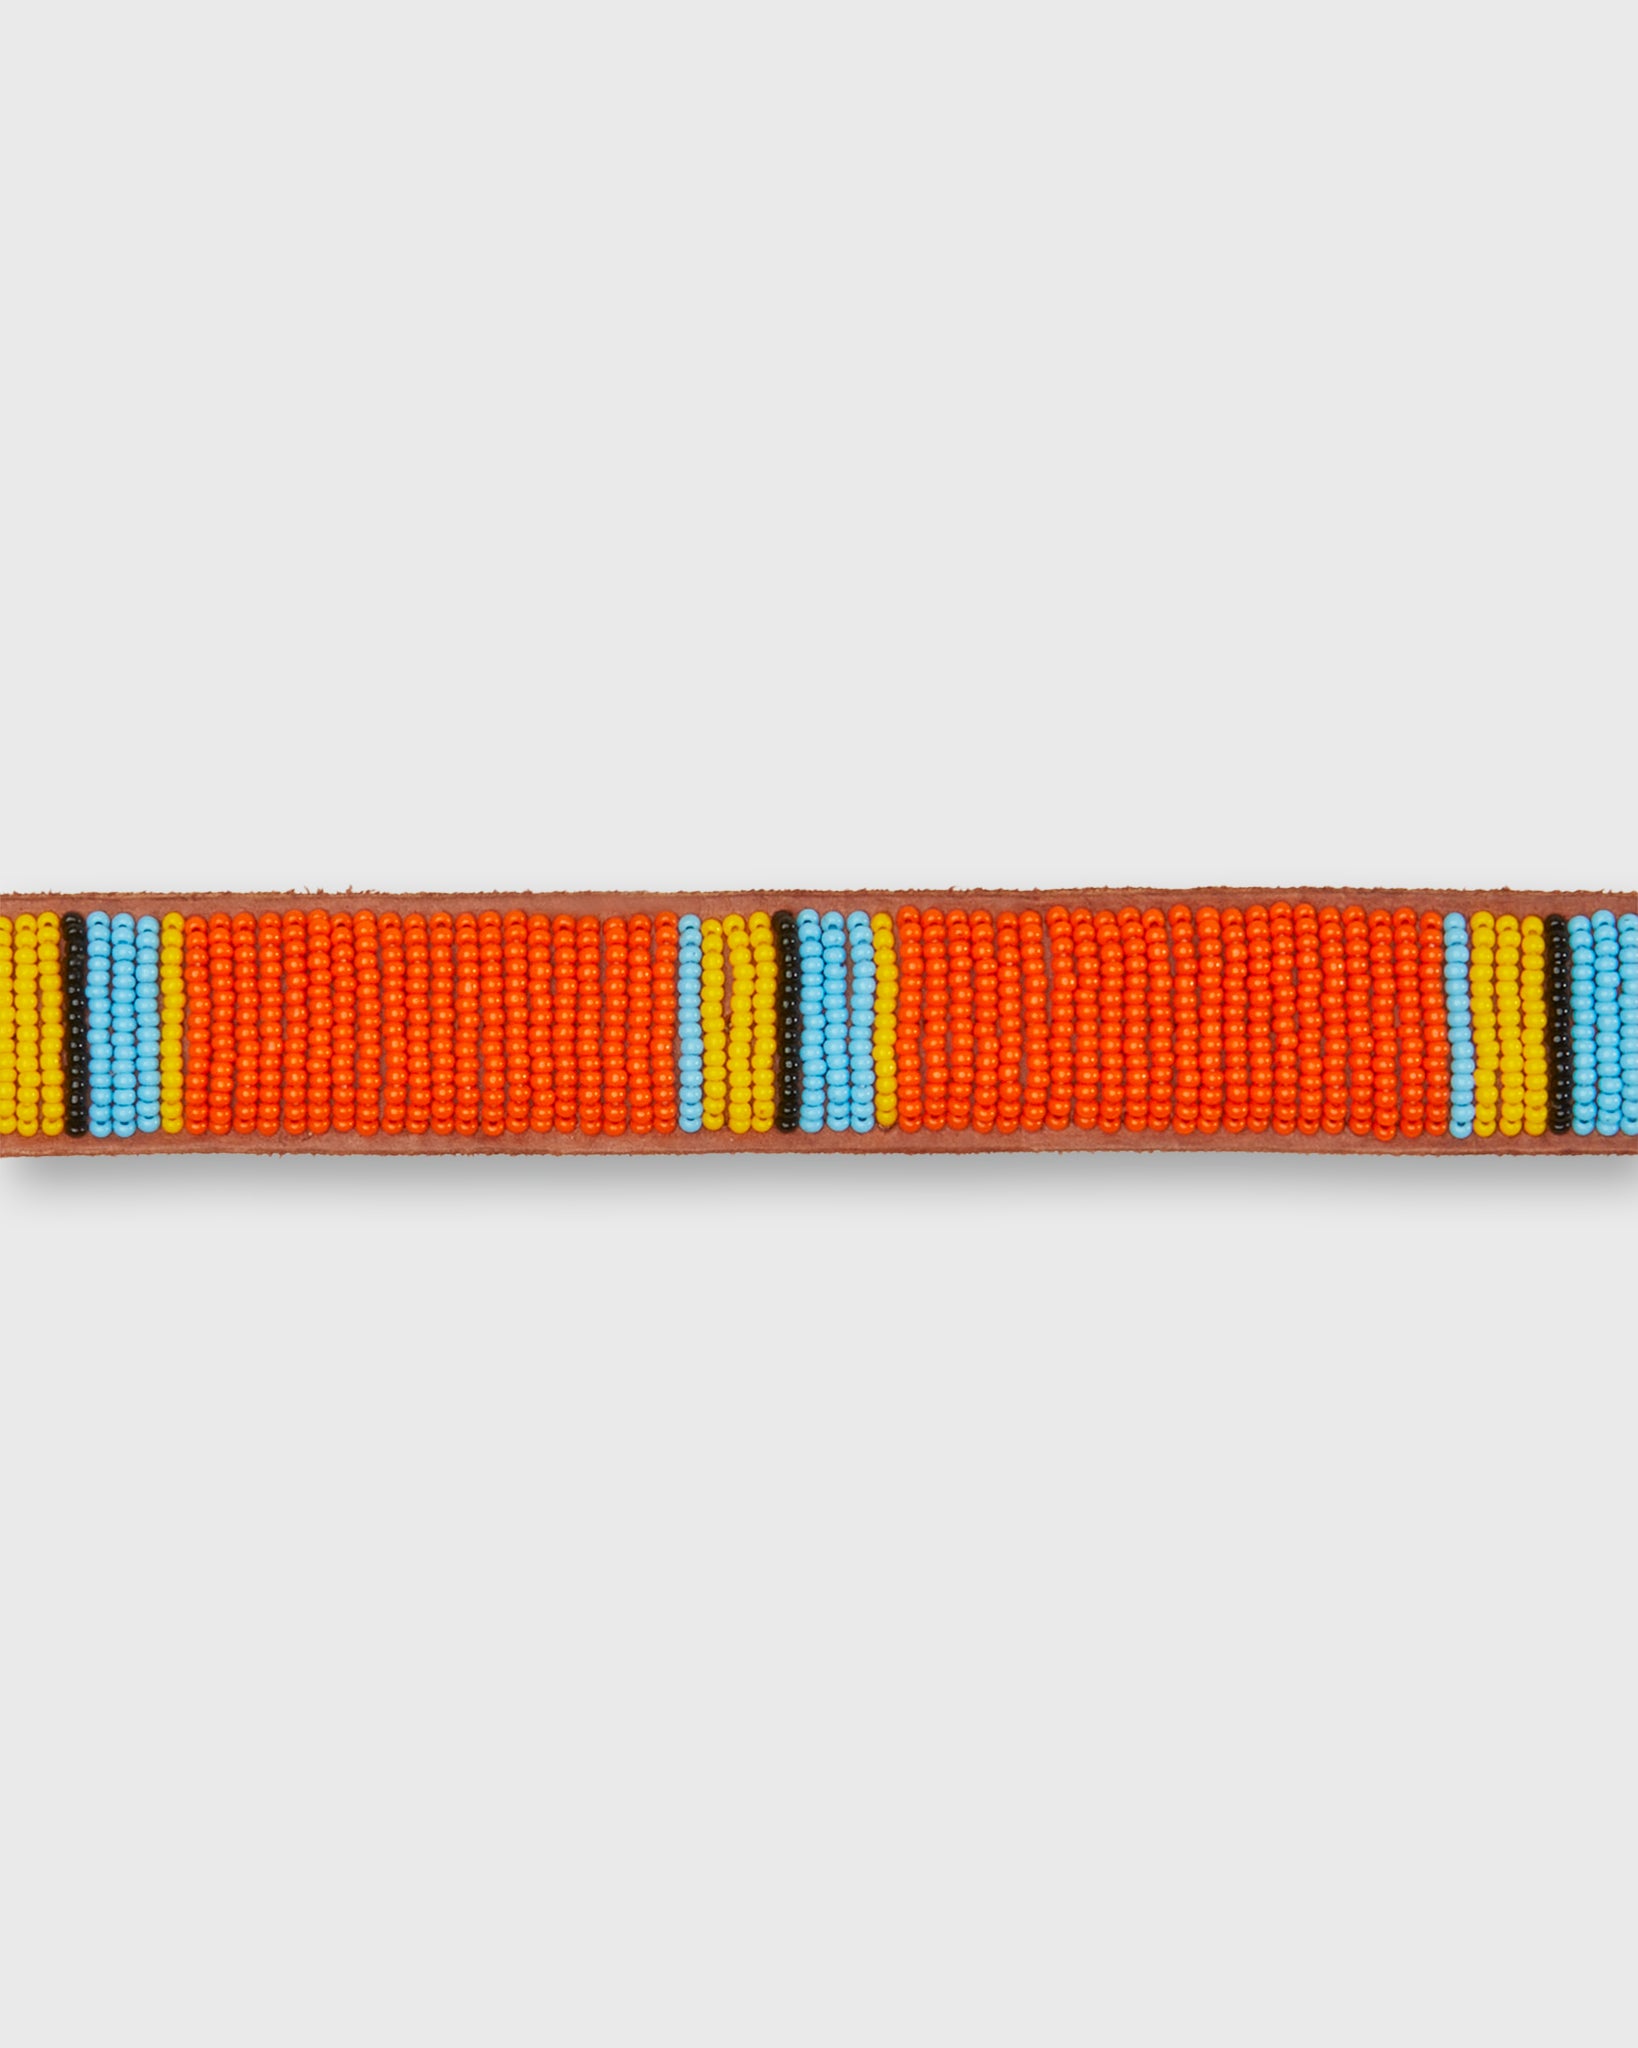 1" African Fully Beaded Belt in Orange/Yellow/Blue